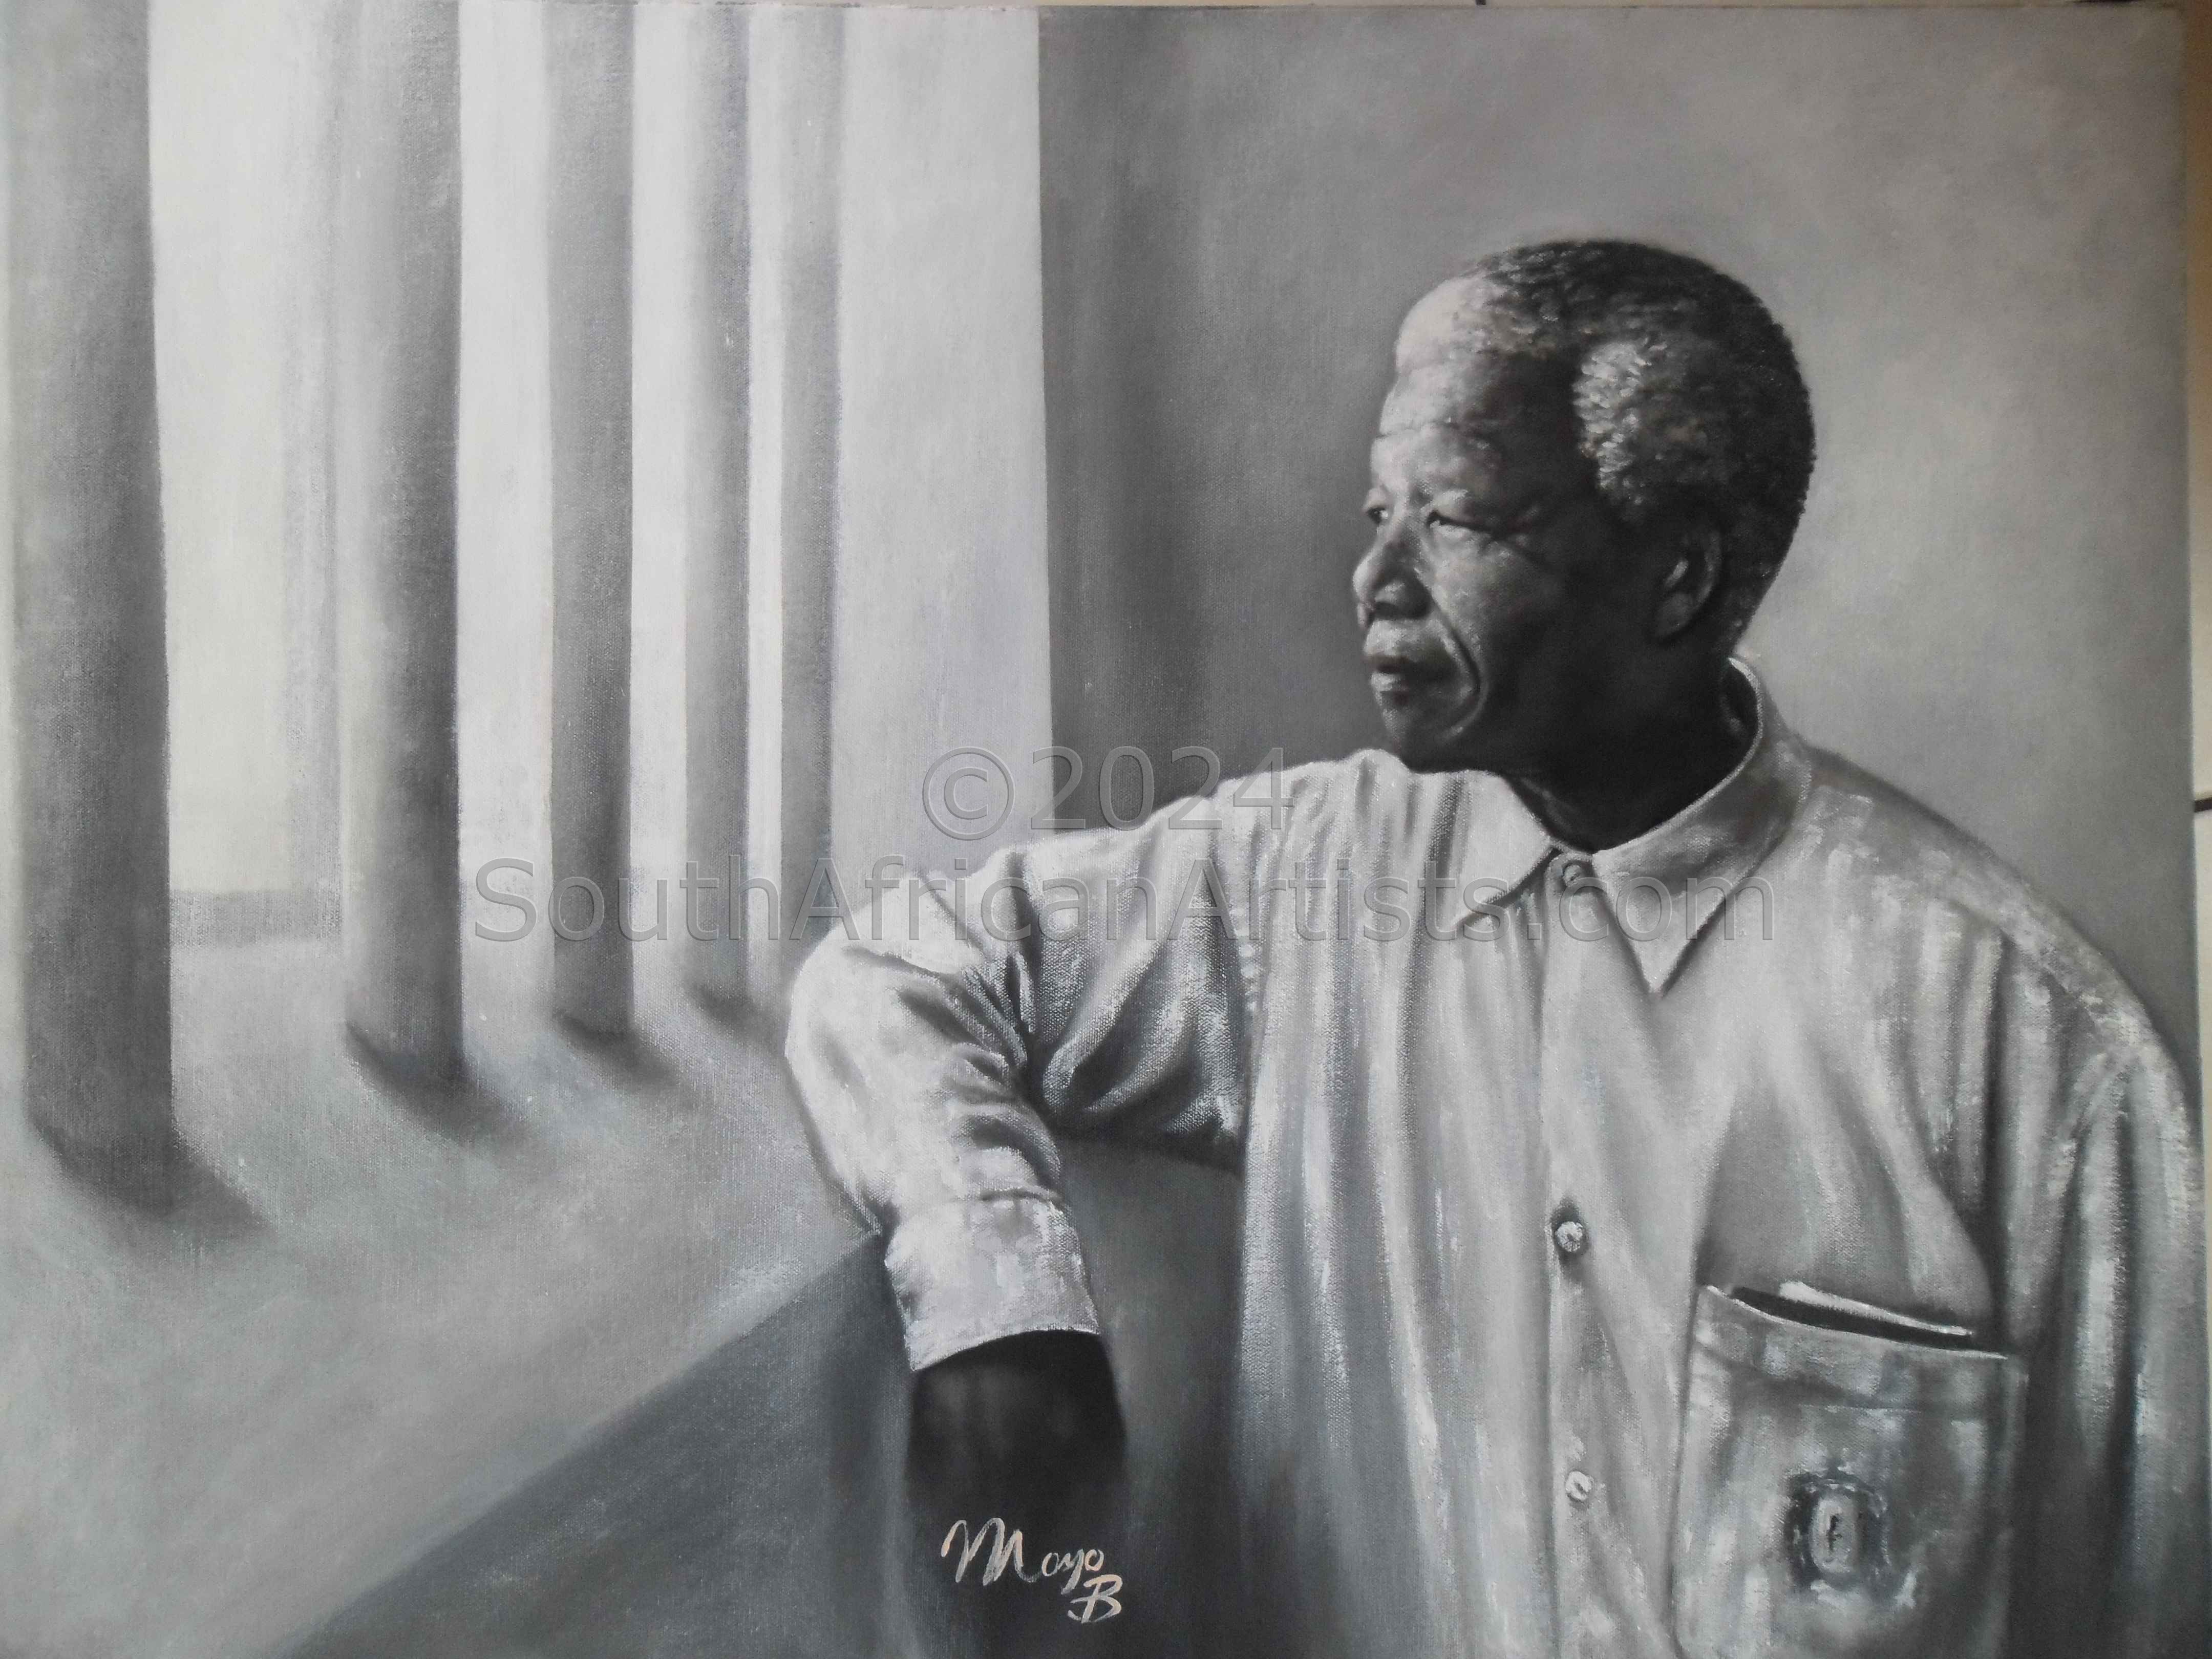 Mandela at the Window